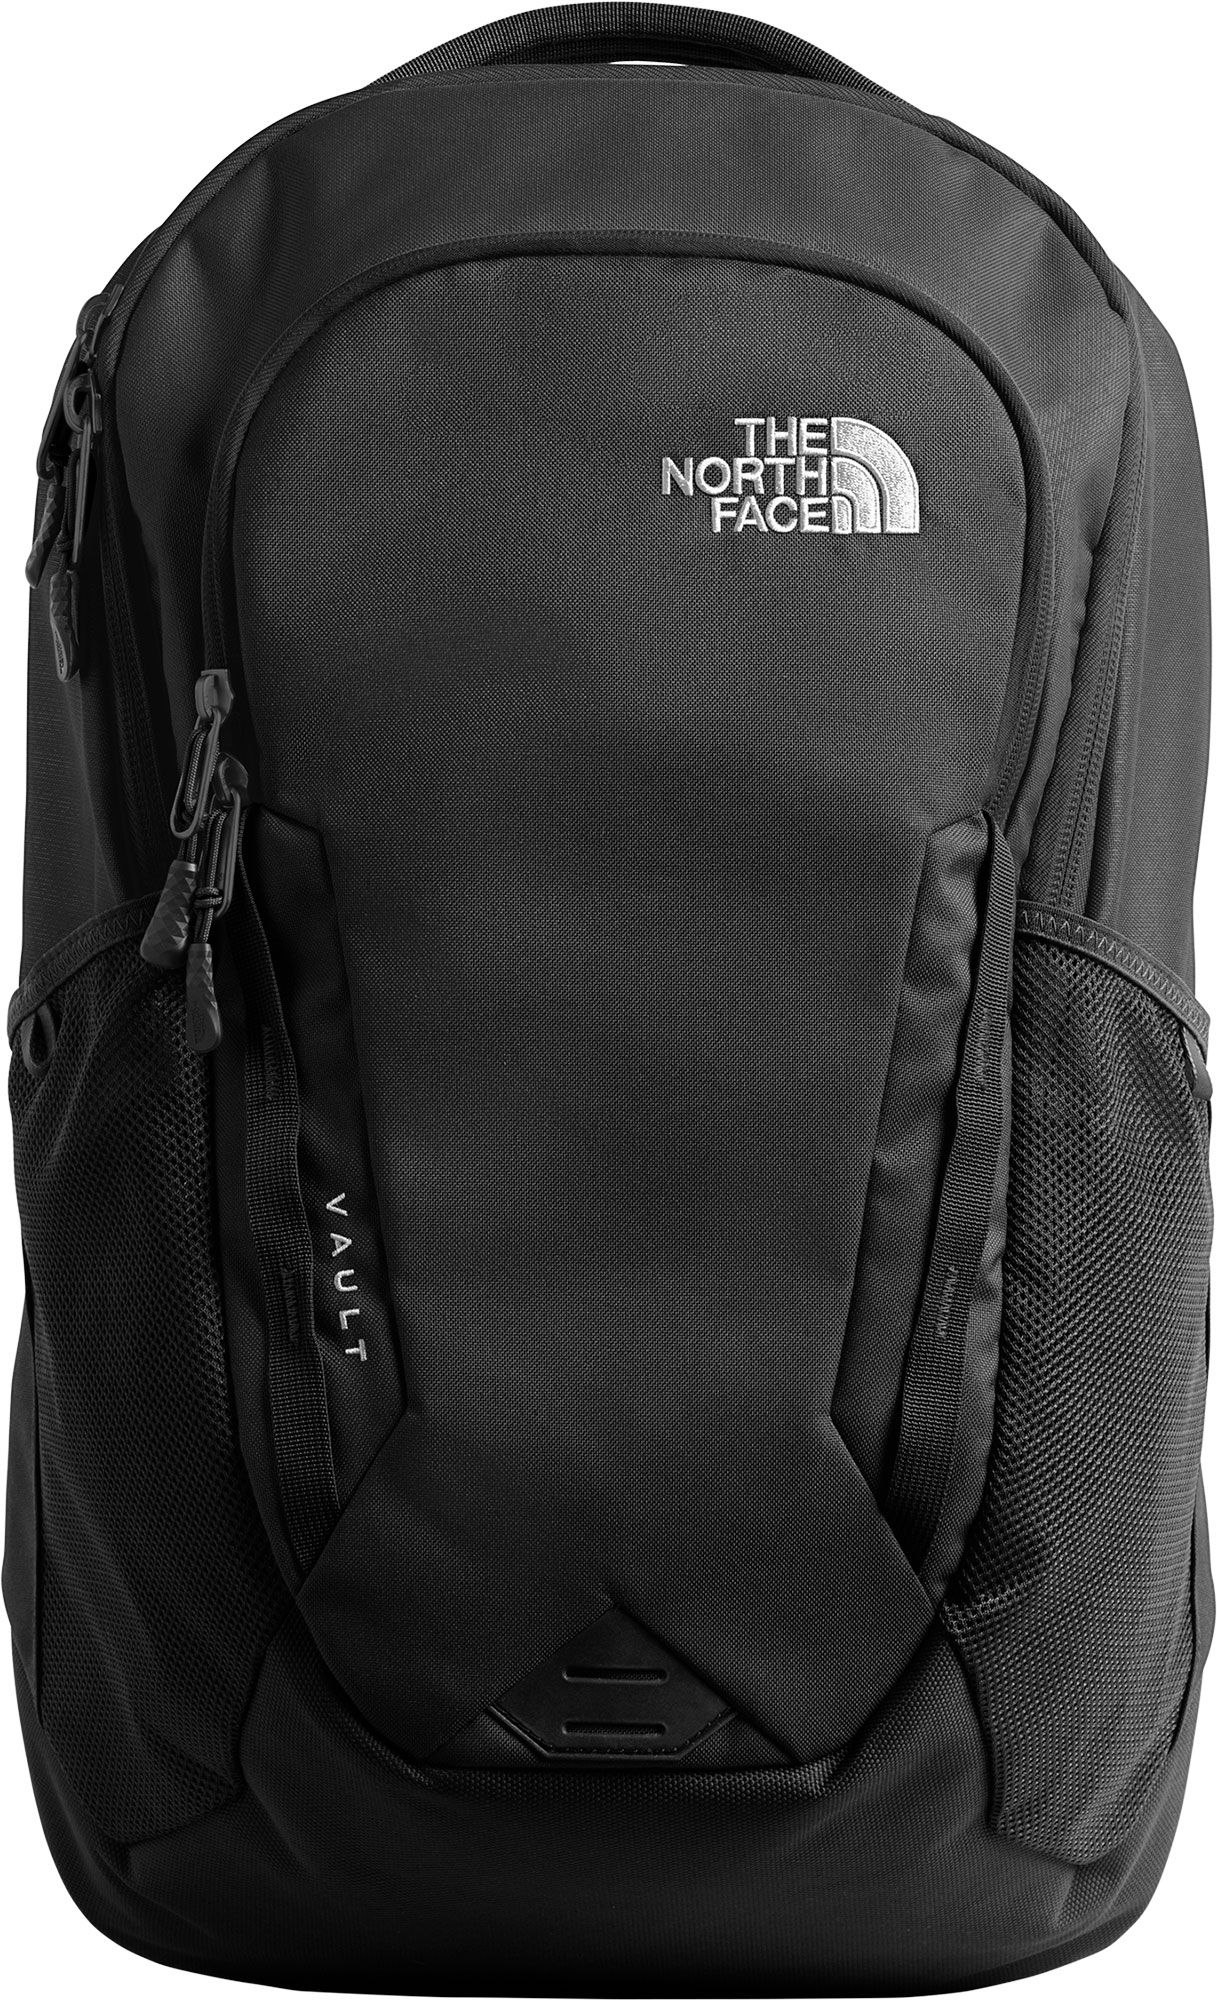 Mens North Face Backpack Sale Online 57 Off Centro Innato Com